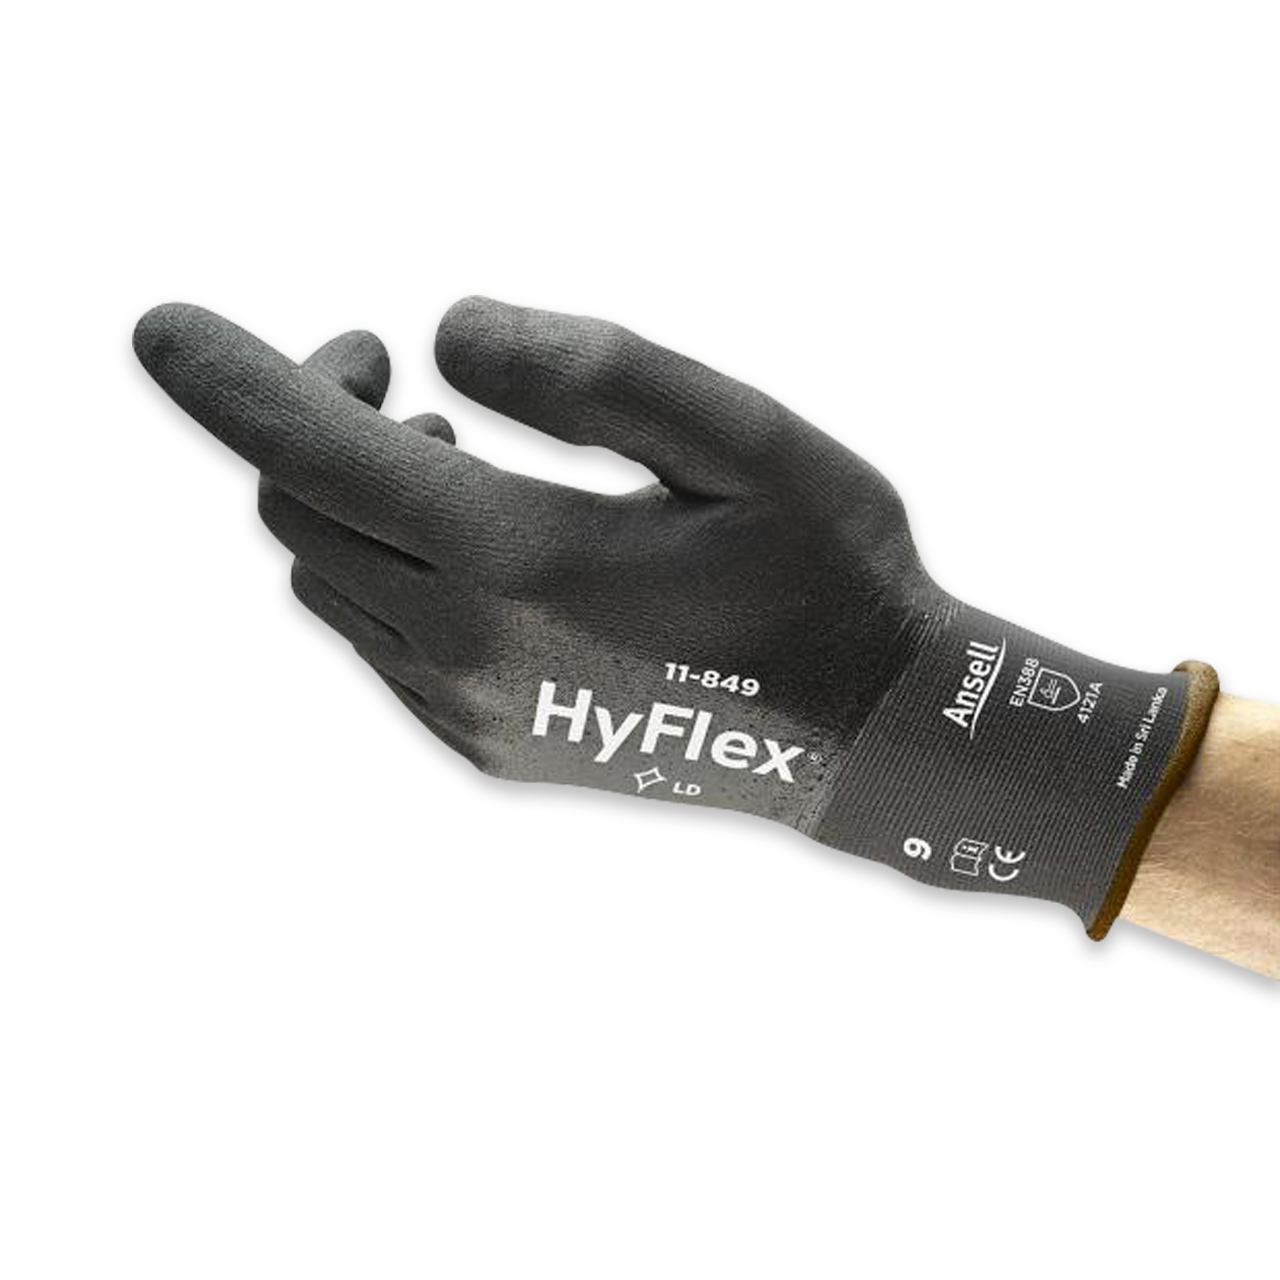 HyFlex® 11-849 M